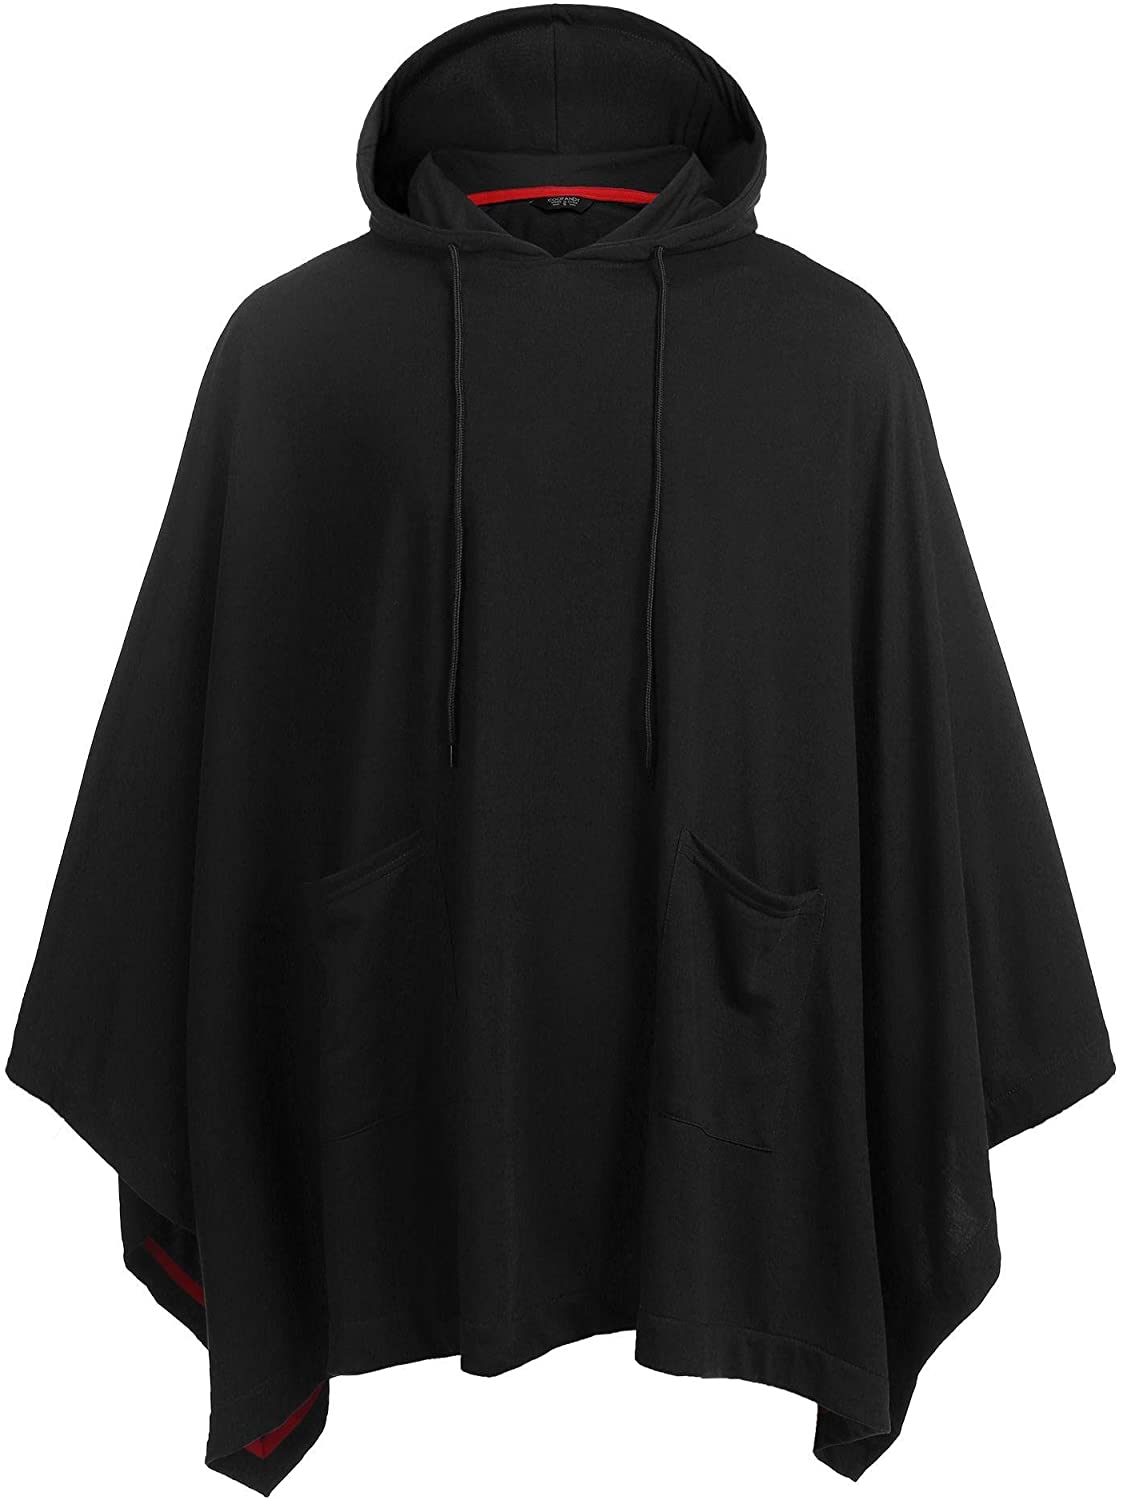 COOFANDY Unisex Casual Hooded Poncho Cape Cloak Fashion Coat Hoodie ...